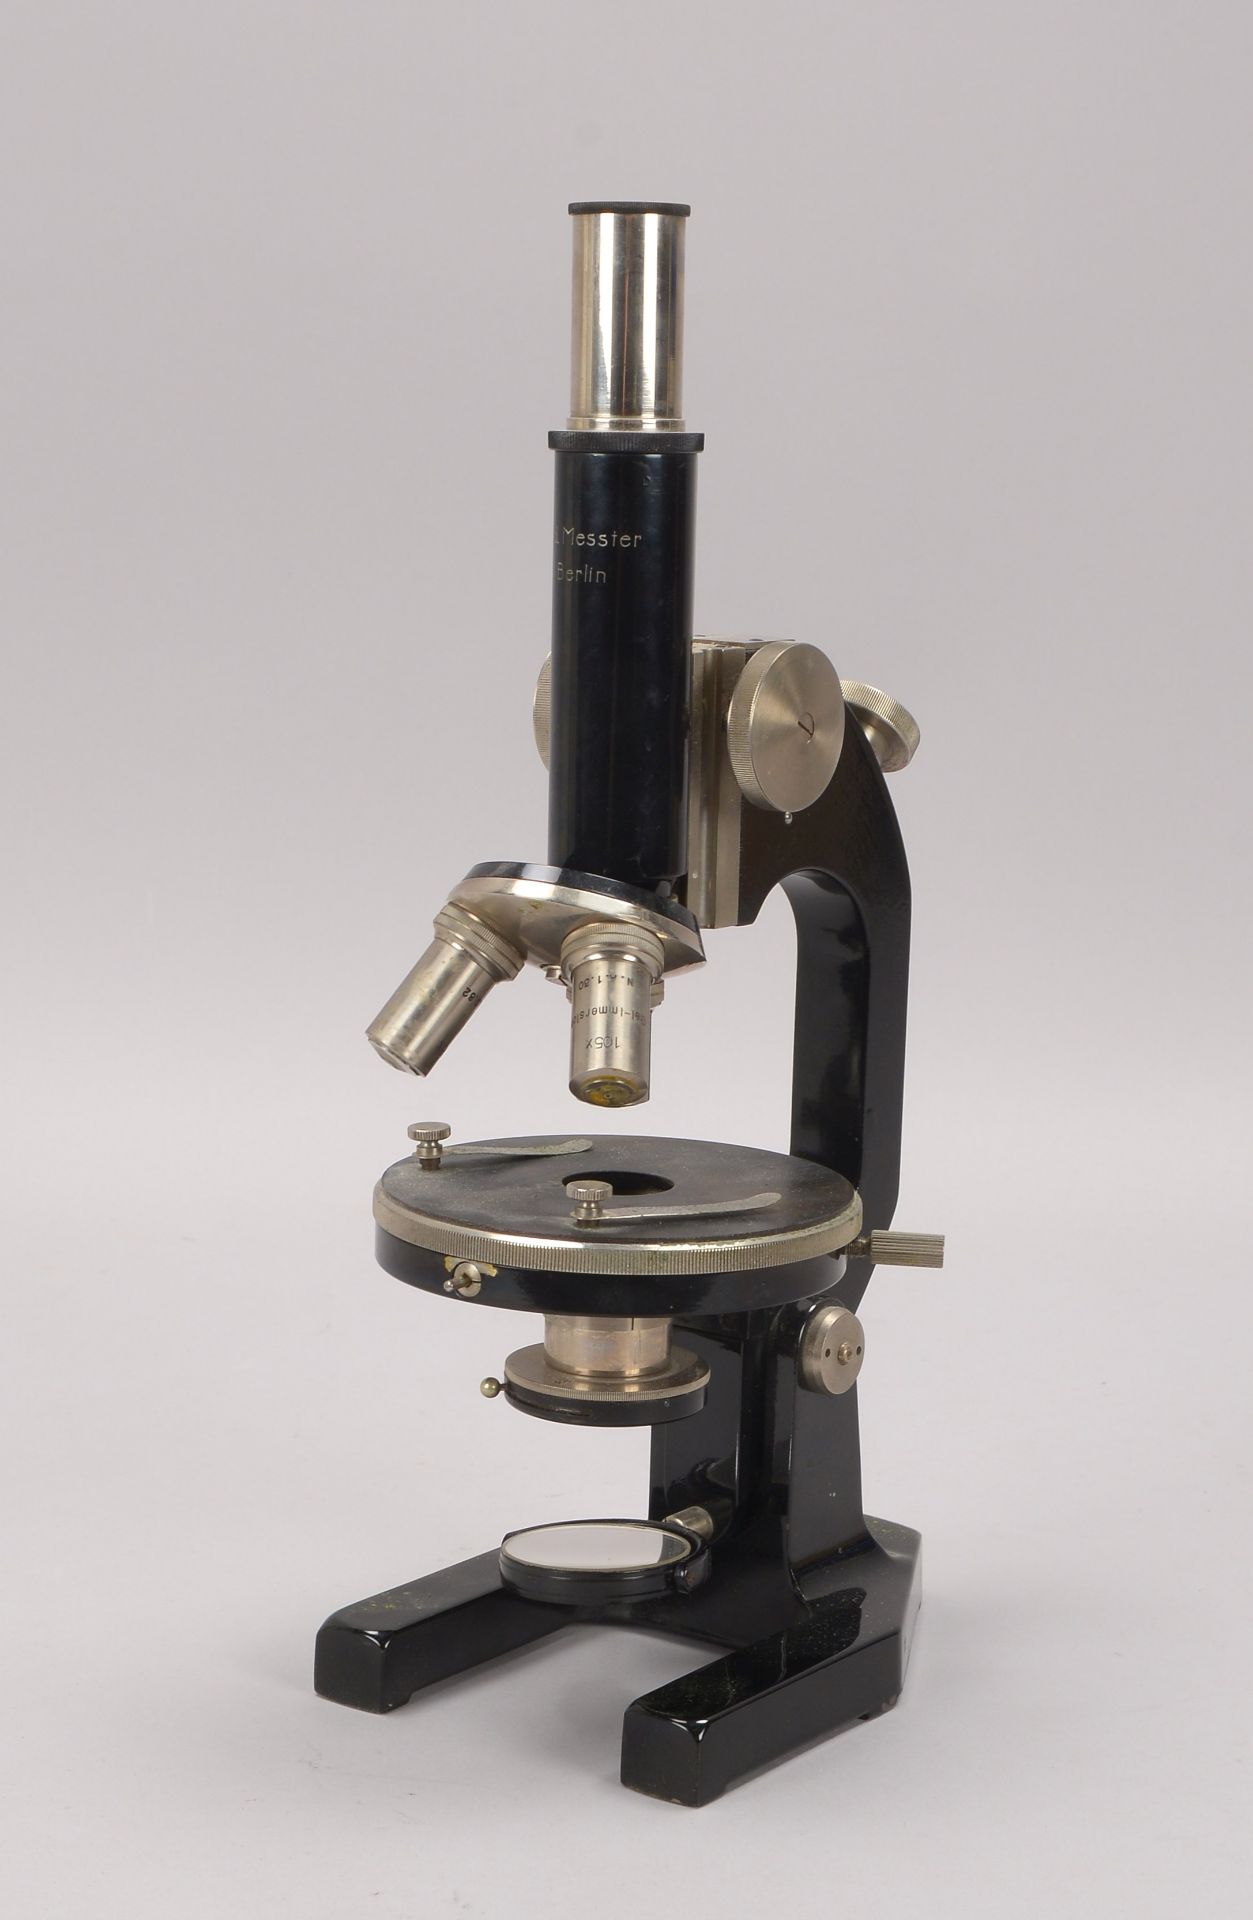 Antikes Mikroskop, Hersteller -Ed. Messter/Berlin-, im Holzkasten, mit Zubehoer, Hoehe Mikroskop: bi